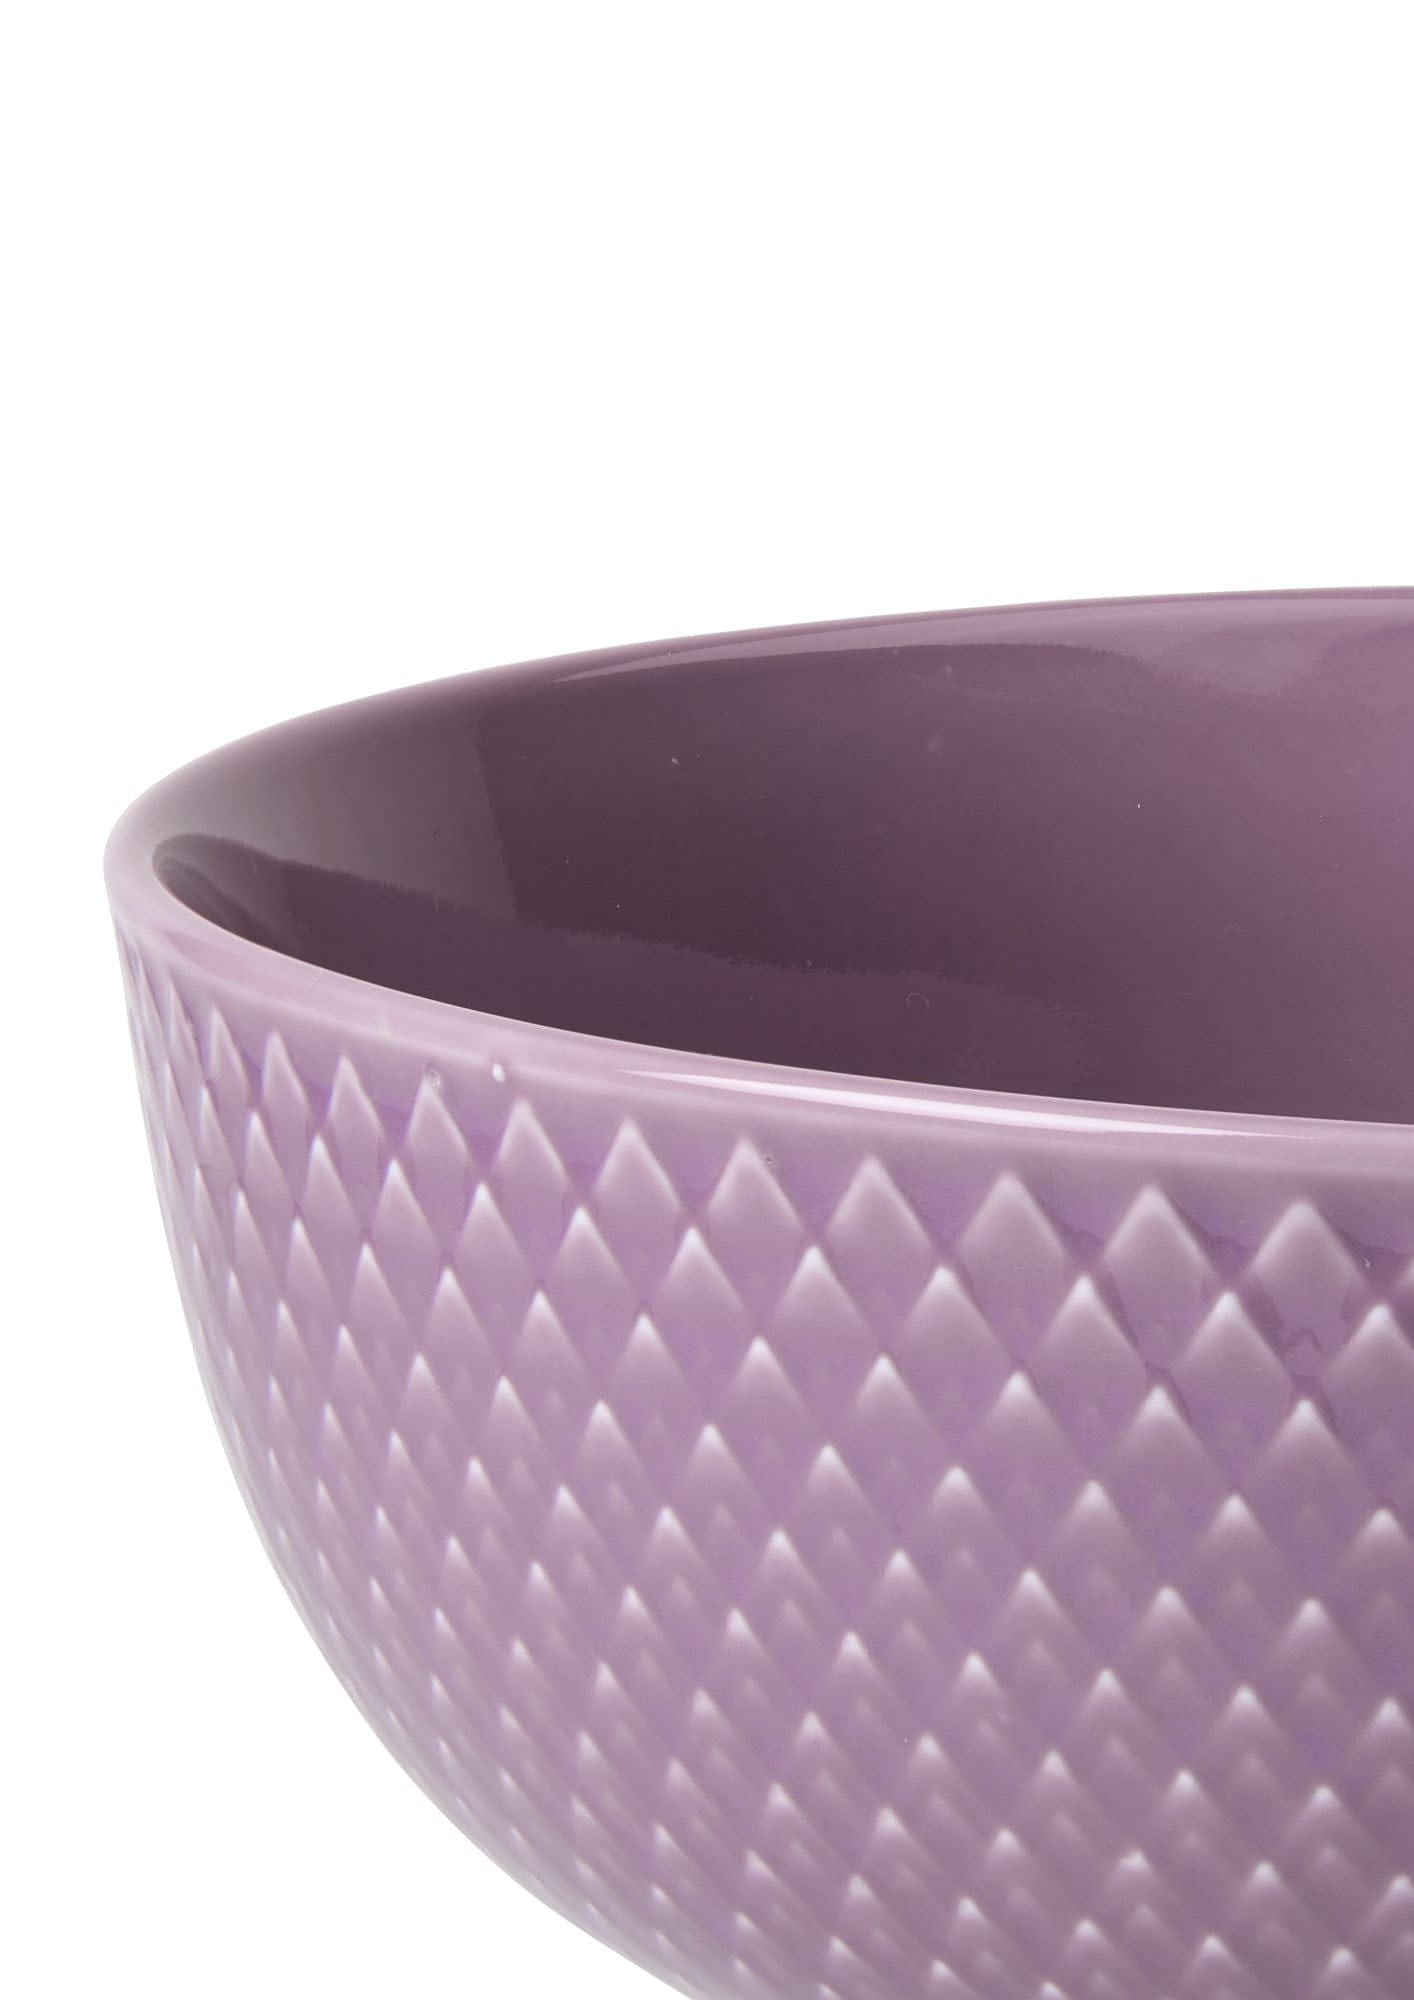 Lyngby Porcelæn Rhombe Color Bowl Ø15,5 cm, lilla